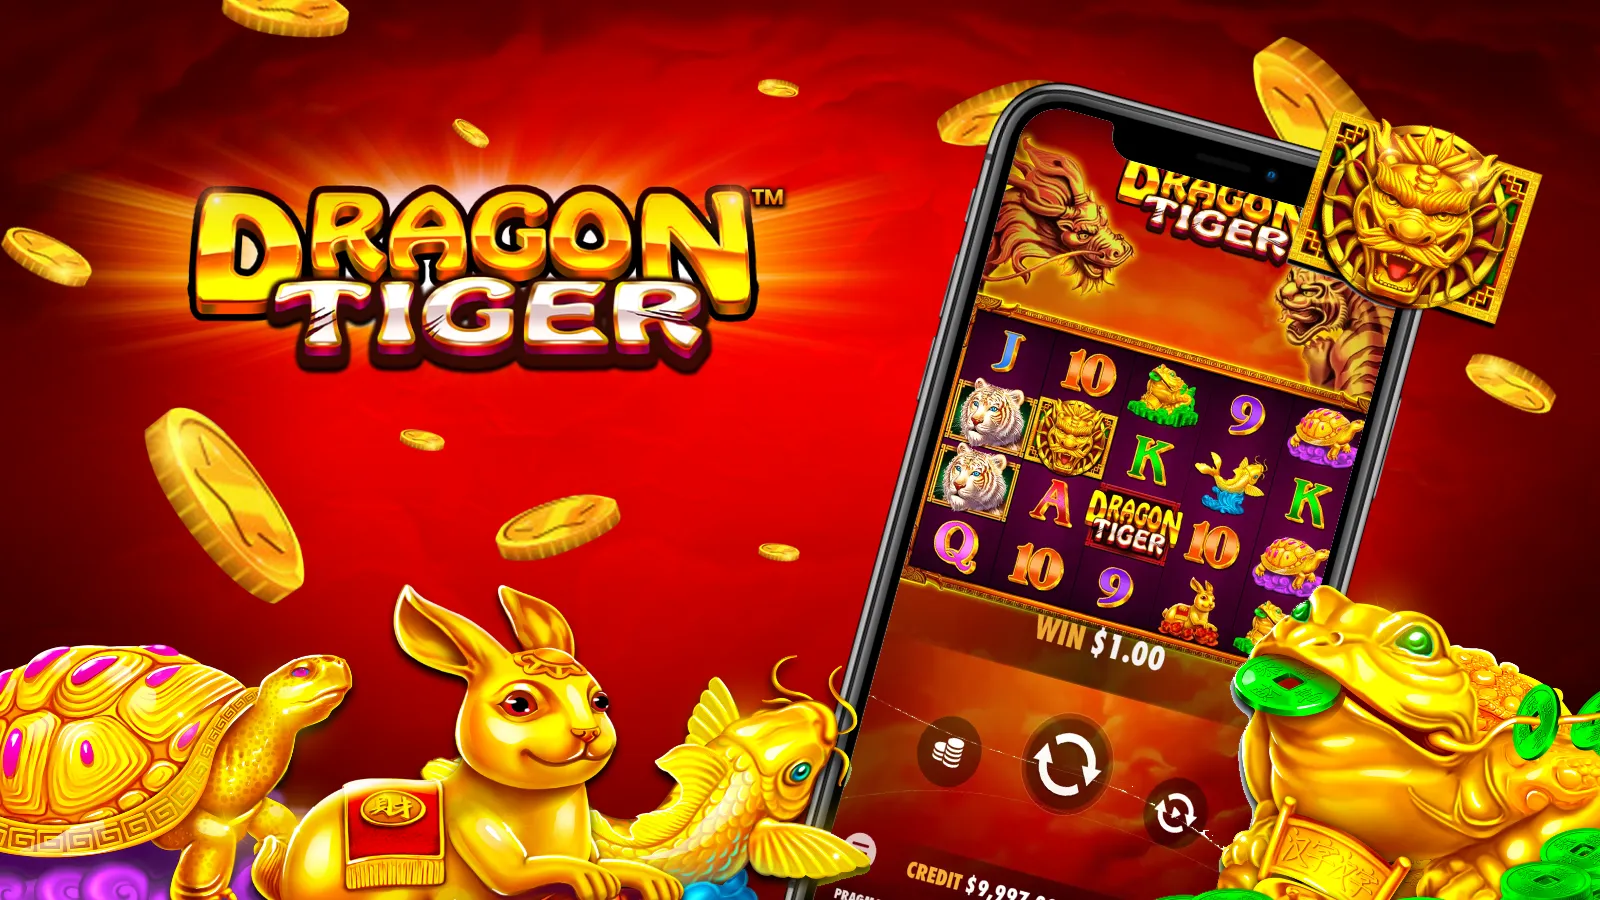 Dragon vs Tiger real cash game